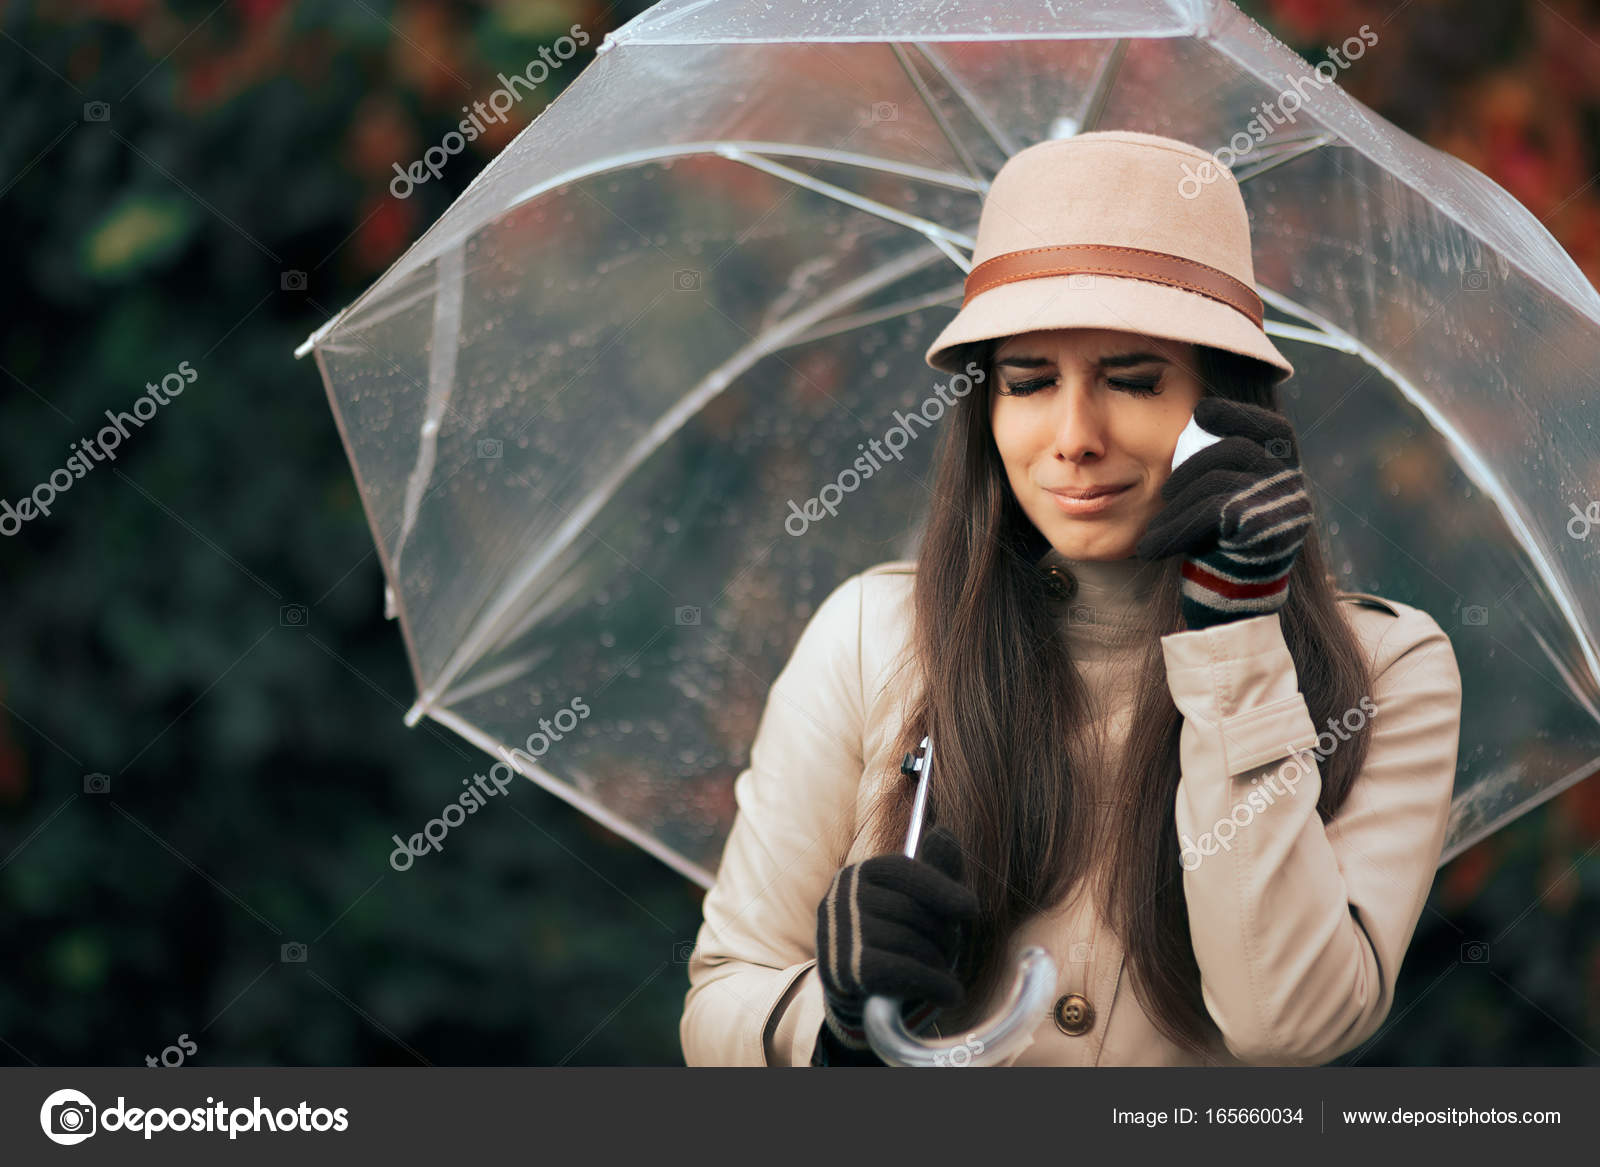 sad girl in the rain with umbrella